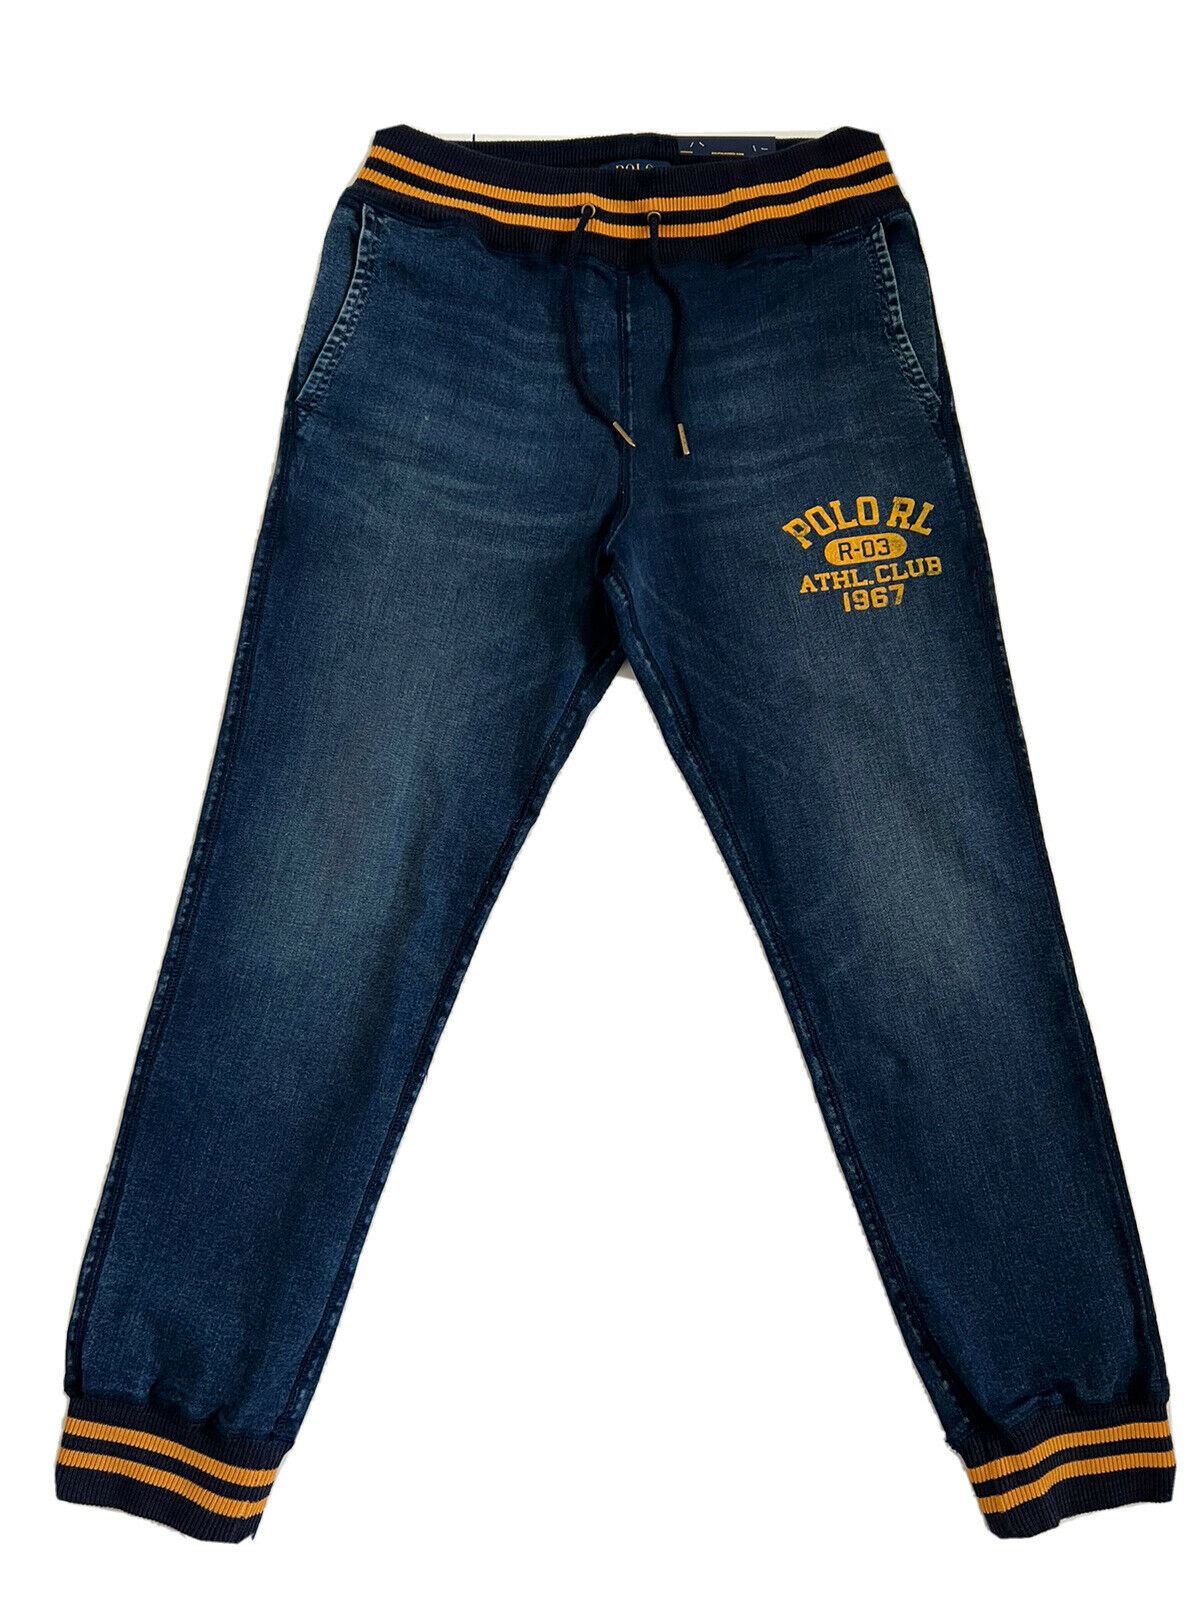 NWT $168 Polo Ralph Lauren Men's Blue Casual Pants Medium